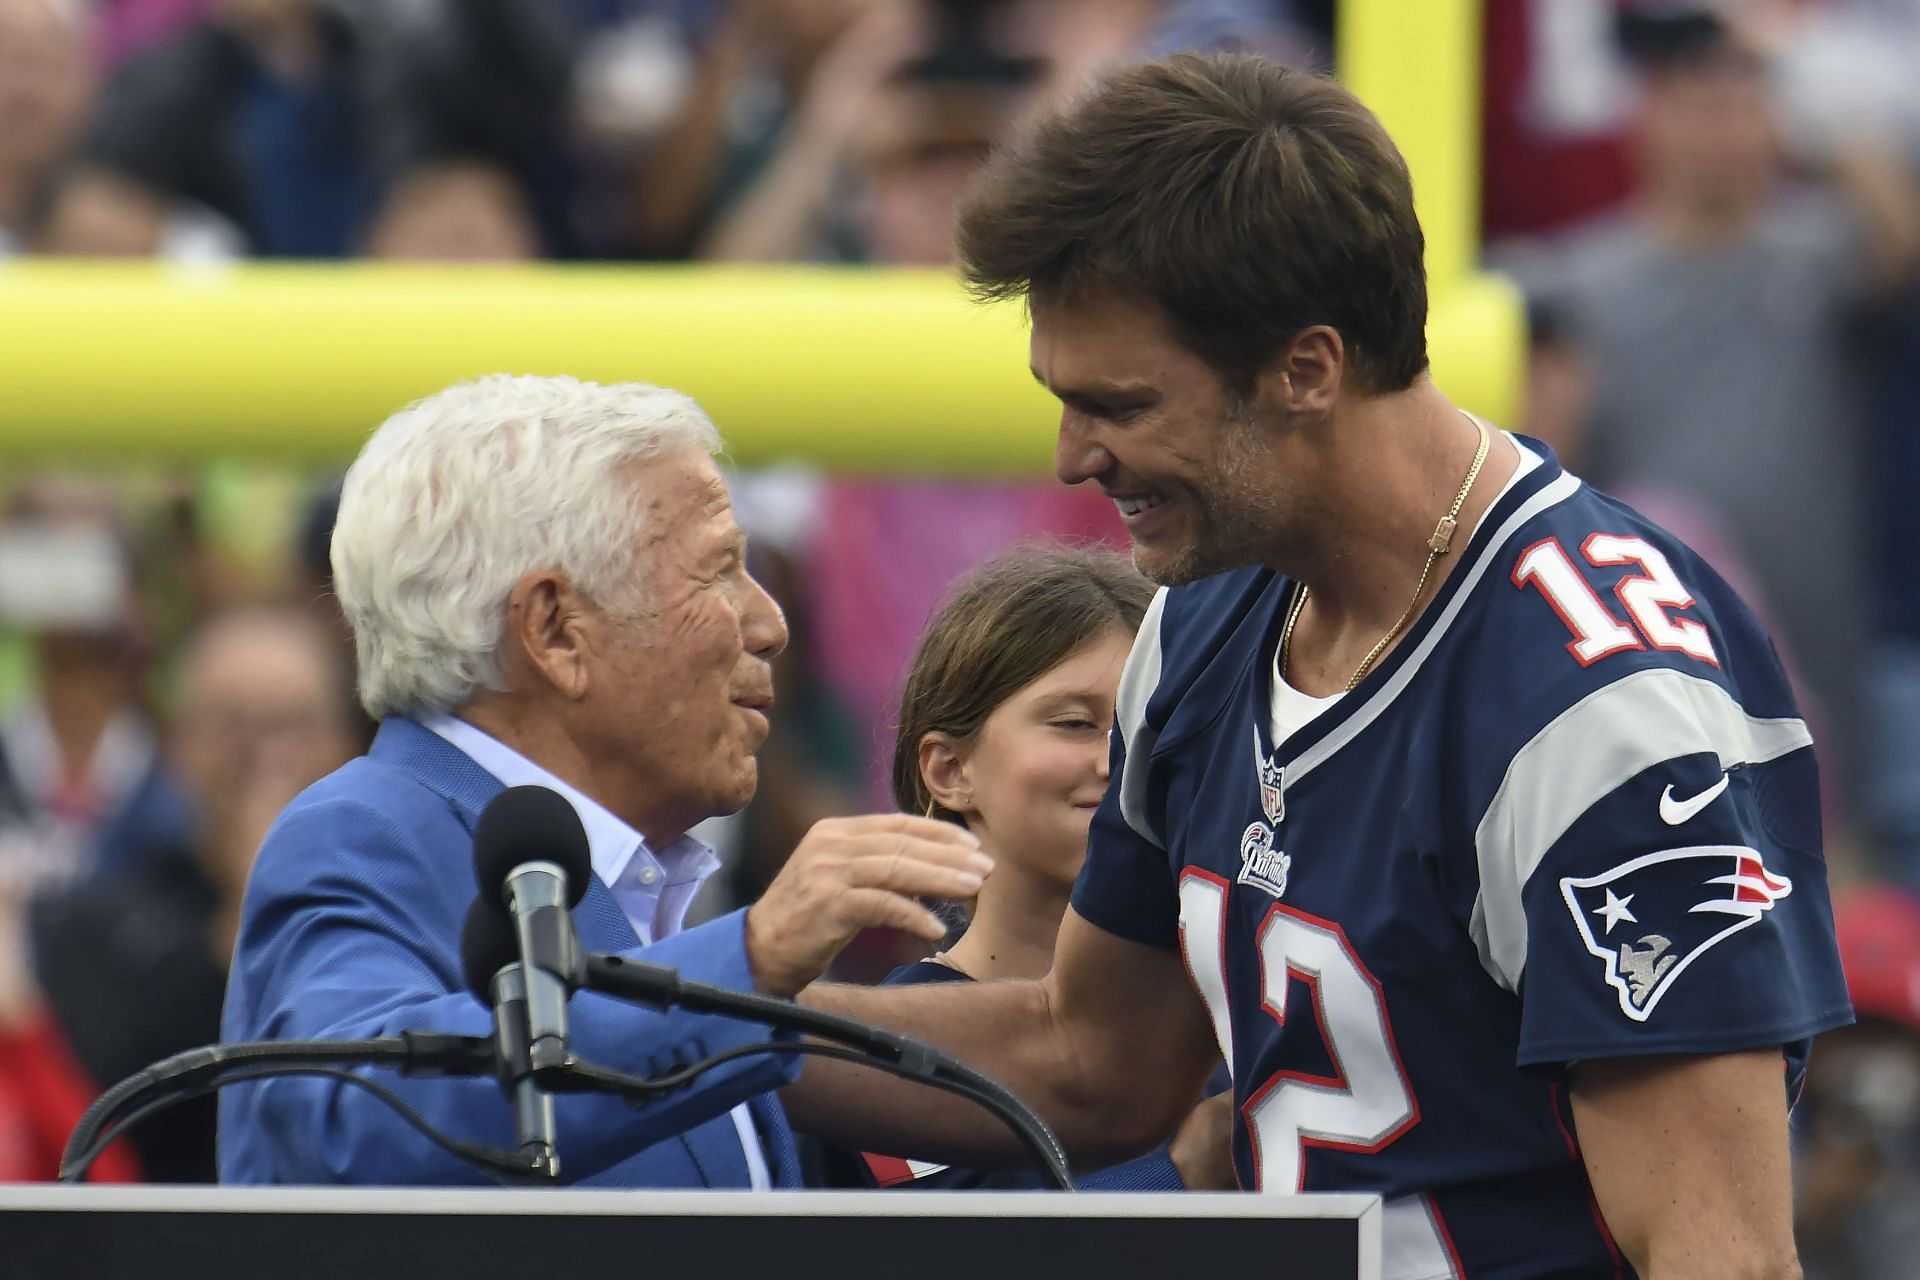 Tom Brady was honored